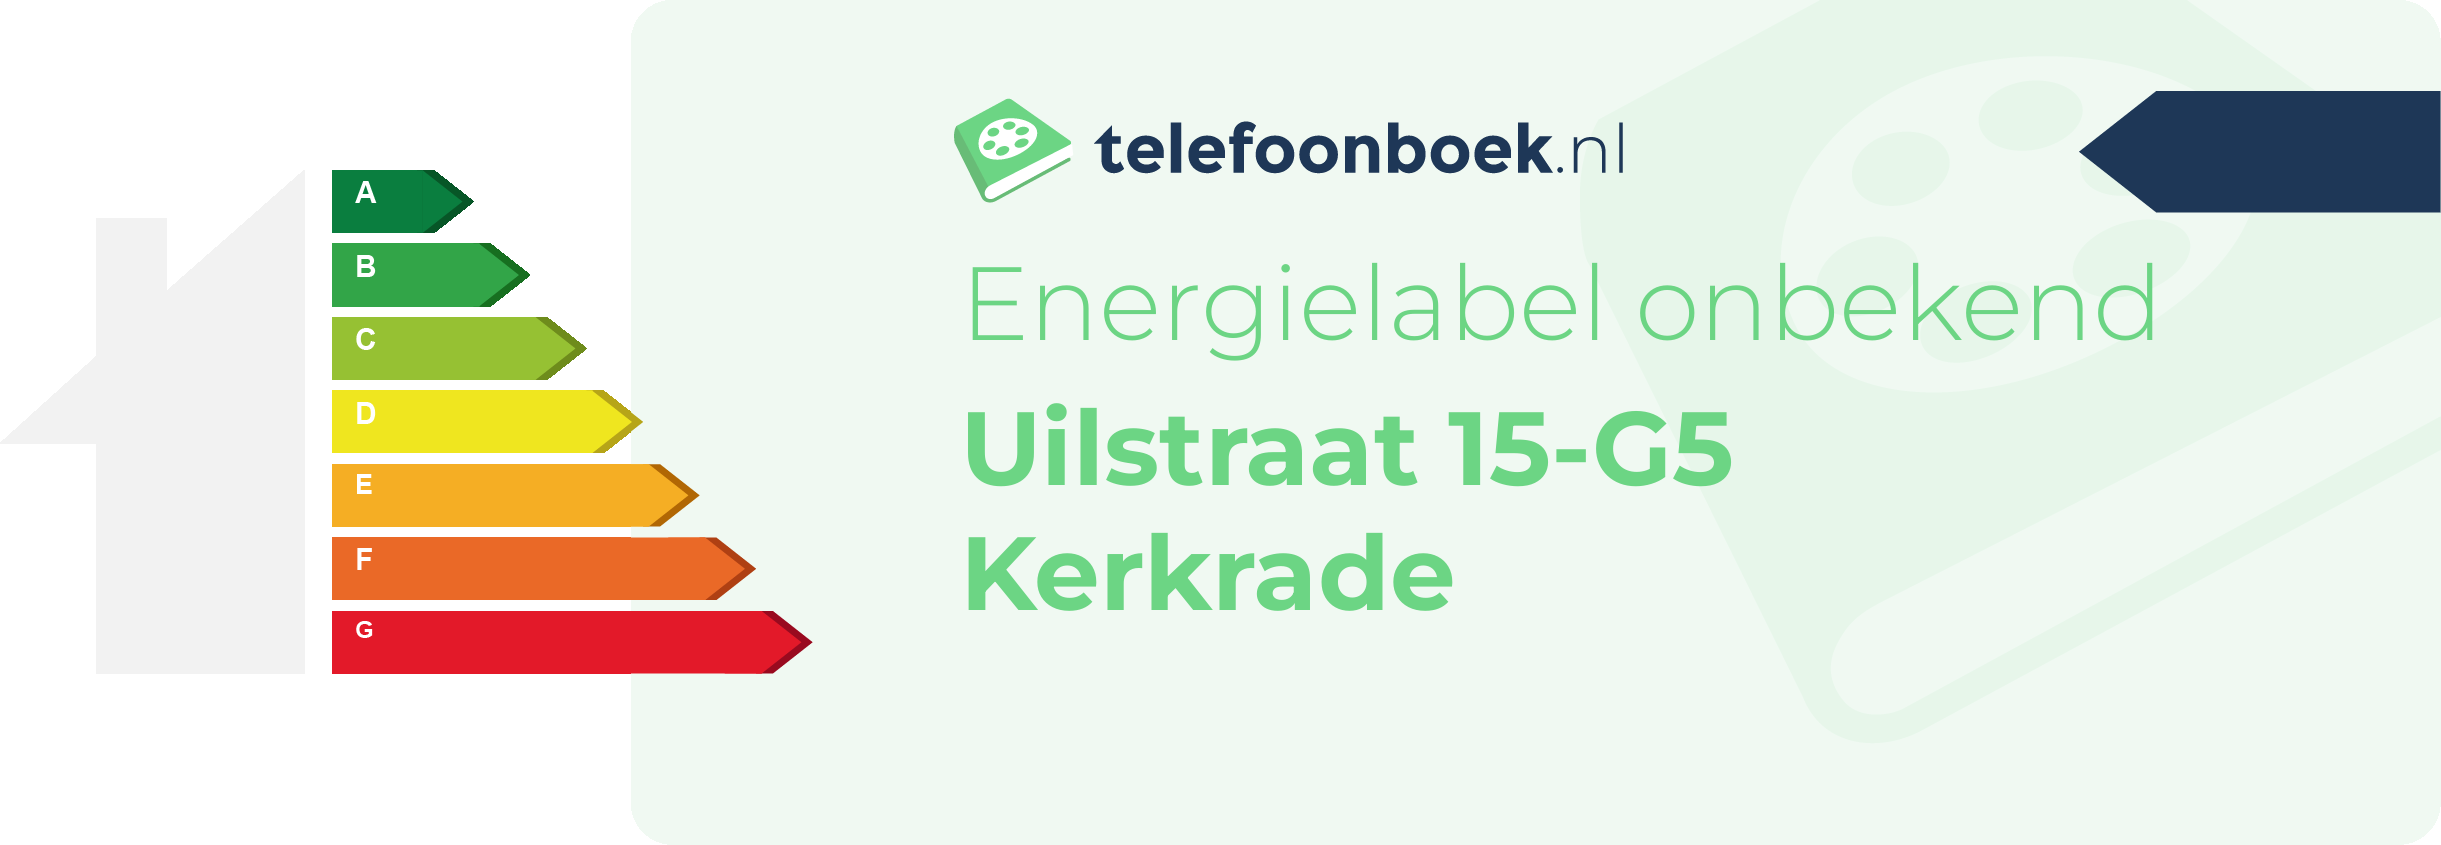 Energielabel Uilstraat 15-G5 Kerkrade